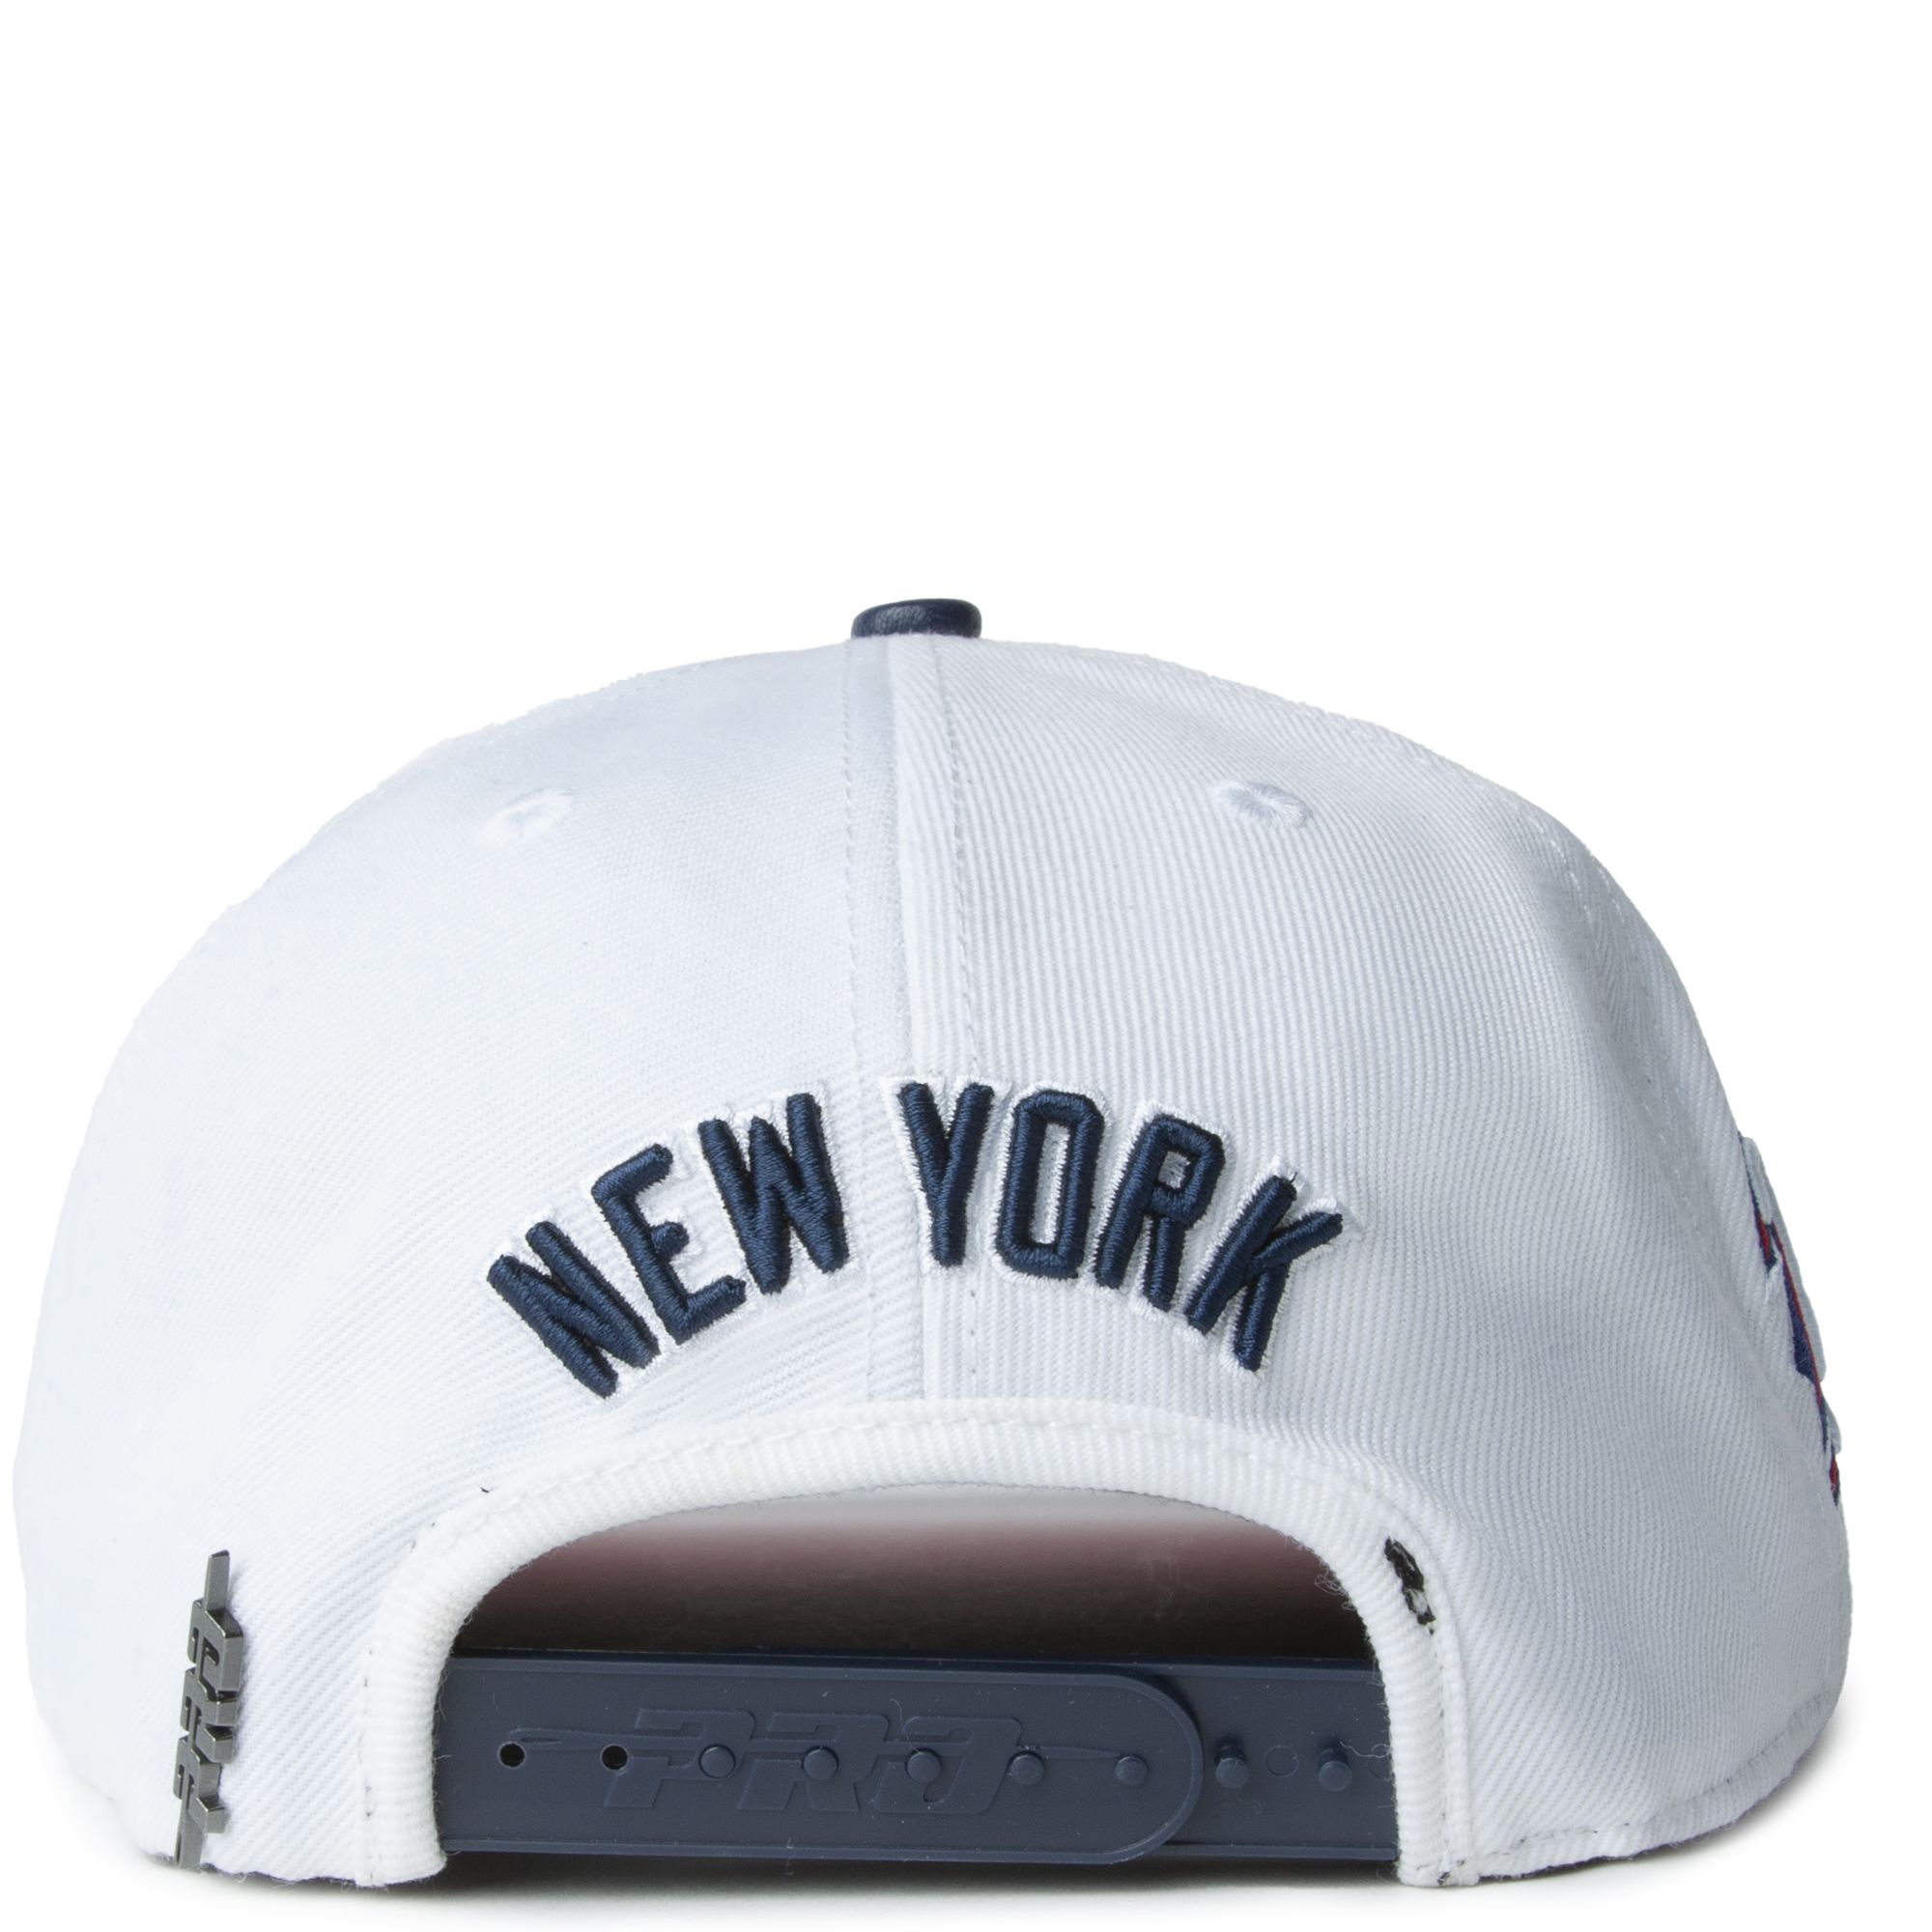 PRO STANDARD Yankees Red Rose Snapback Hat LNY732132-WHT - Shiekh